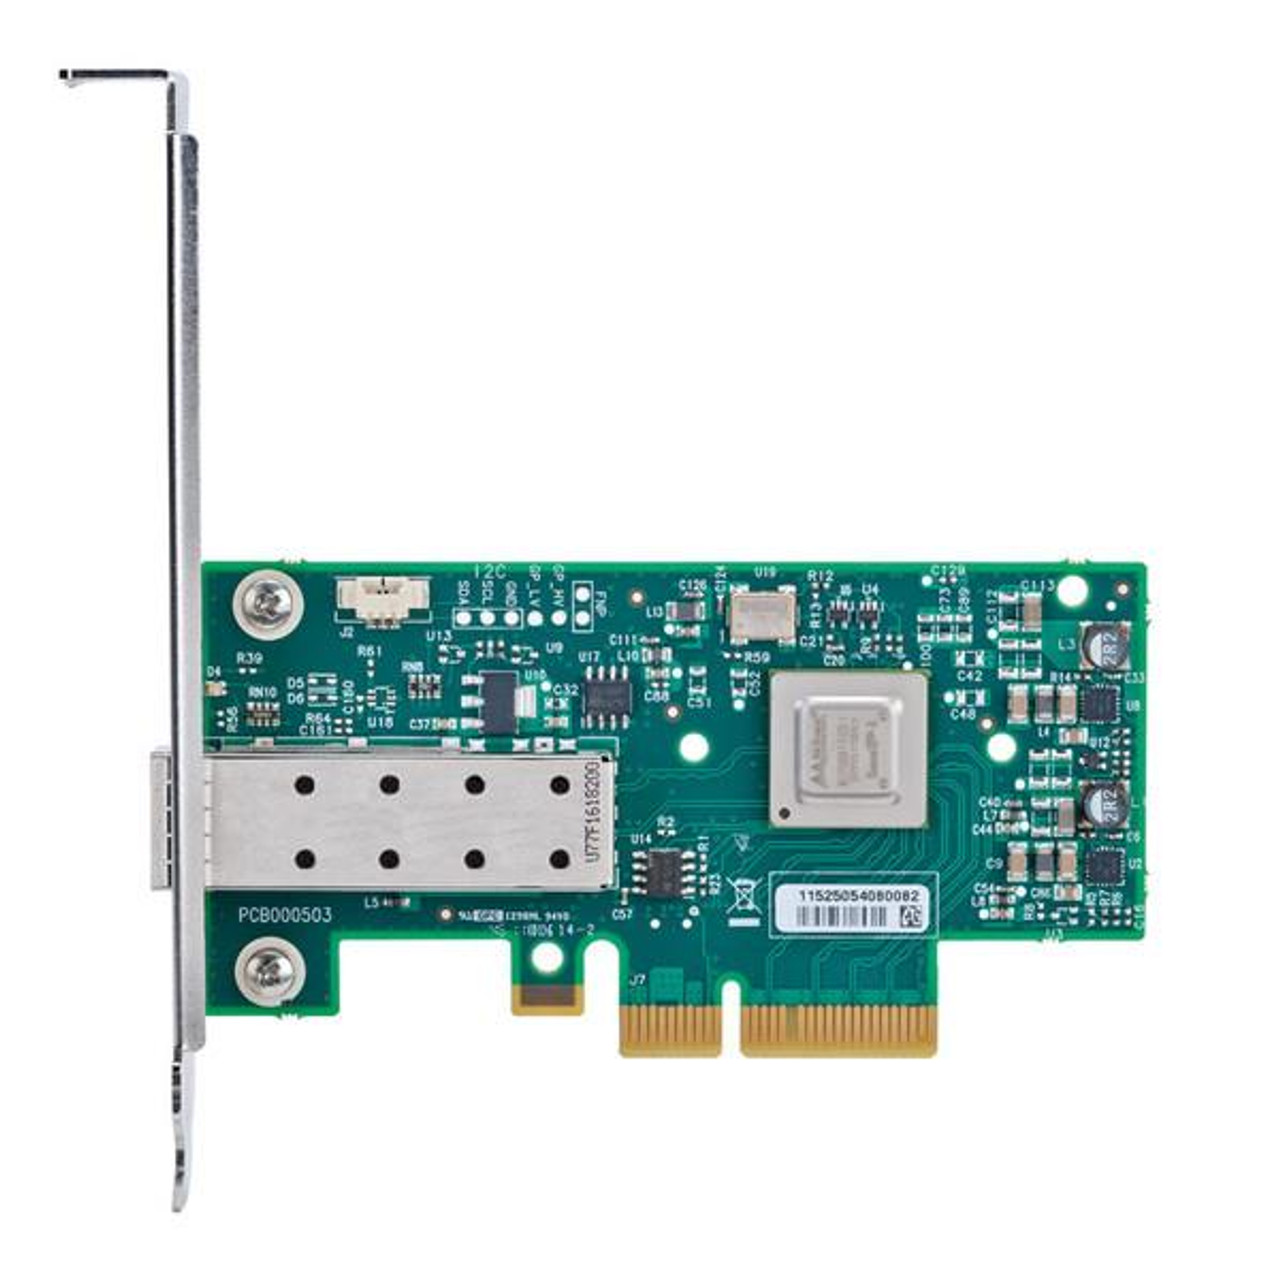 MCX311A-XCCT Mellanox ConnectX-3 Pro Single-Port 10Gbps PCI Express 3.0 x8 Network Interface Card